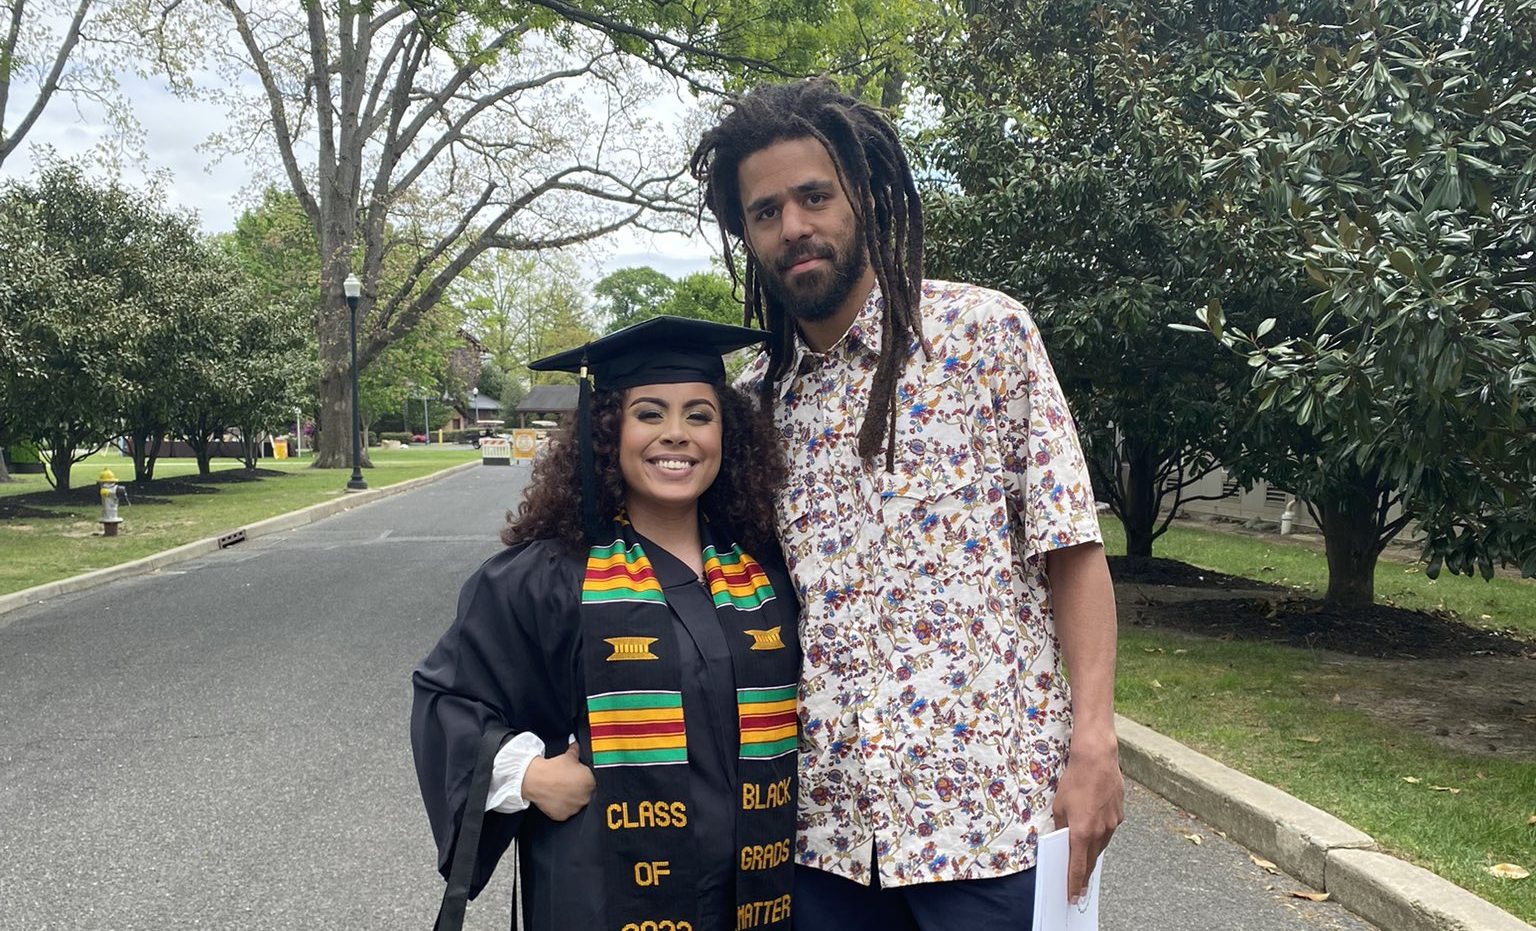 J. Cole Surprises Superfan By Attending Her College Graduation